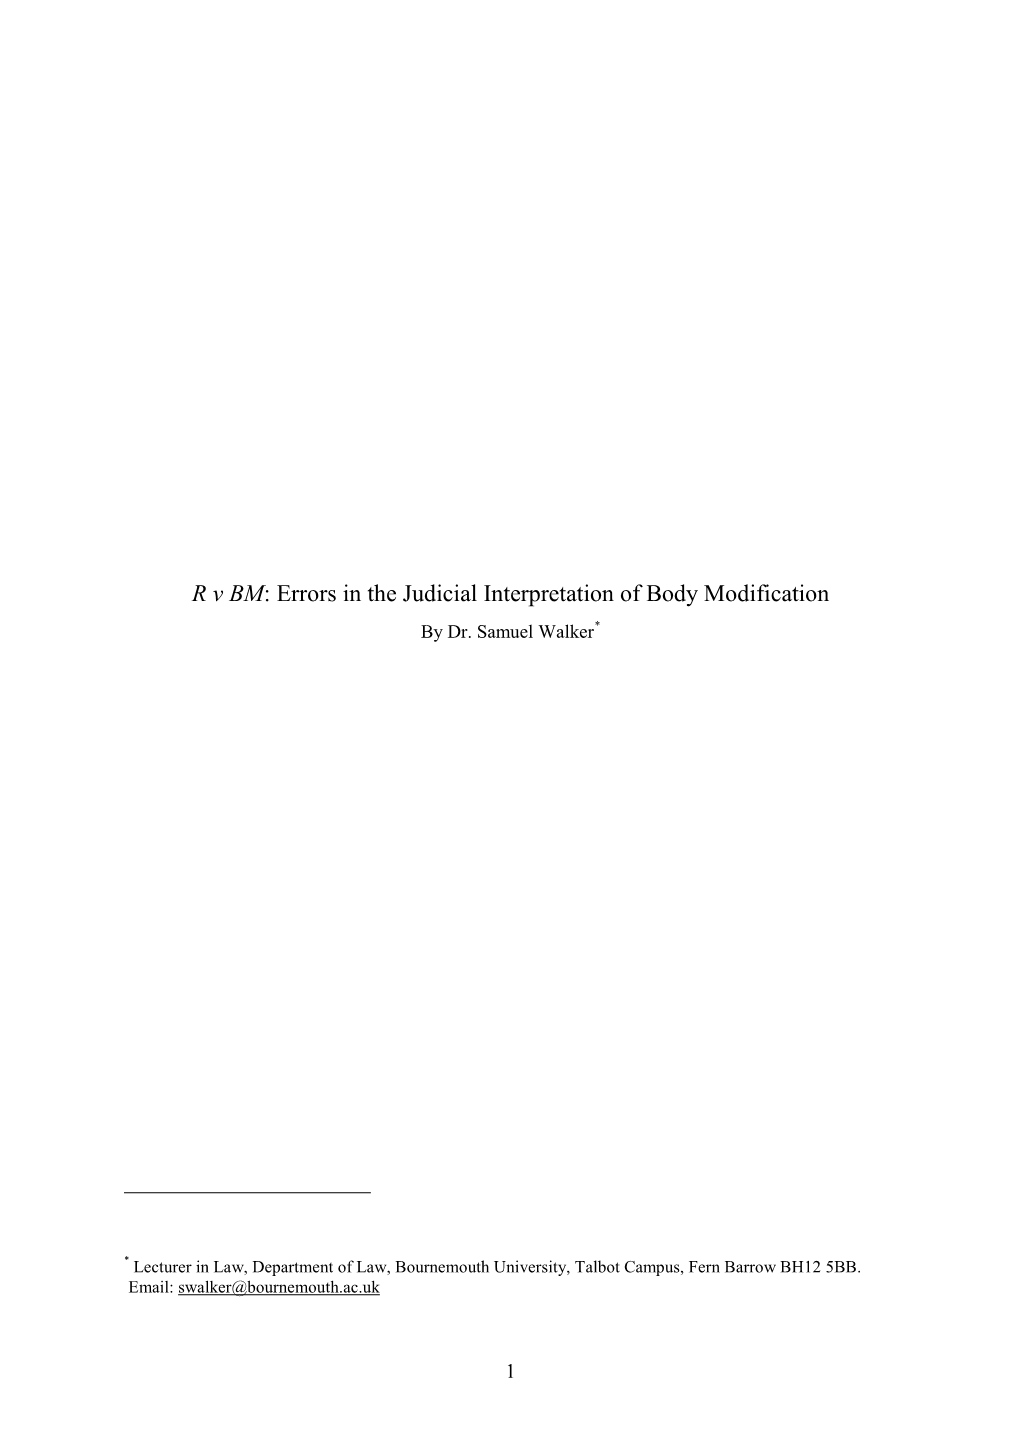 R V BM: Errors in the Judicial Interpretation of Body Modification by Dr